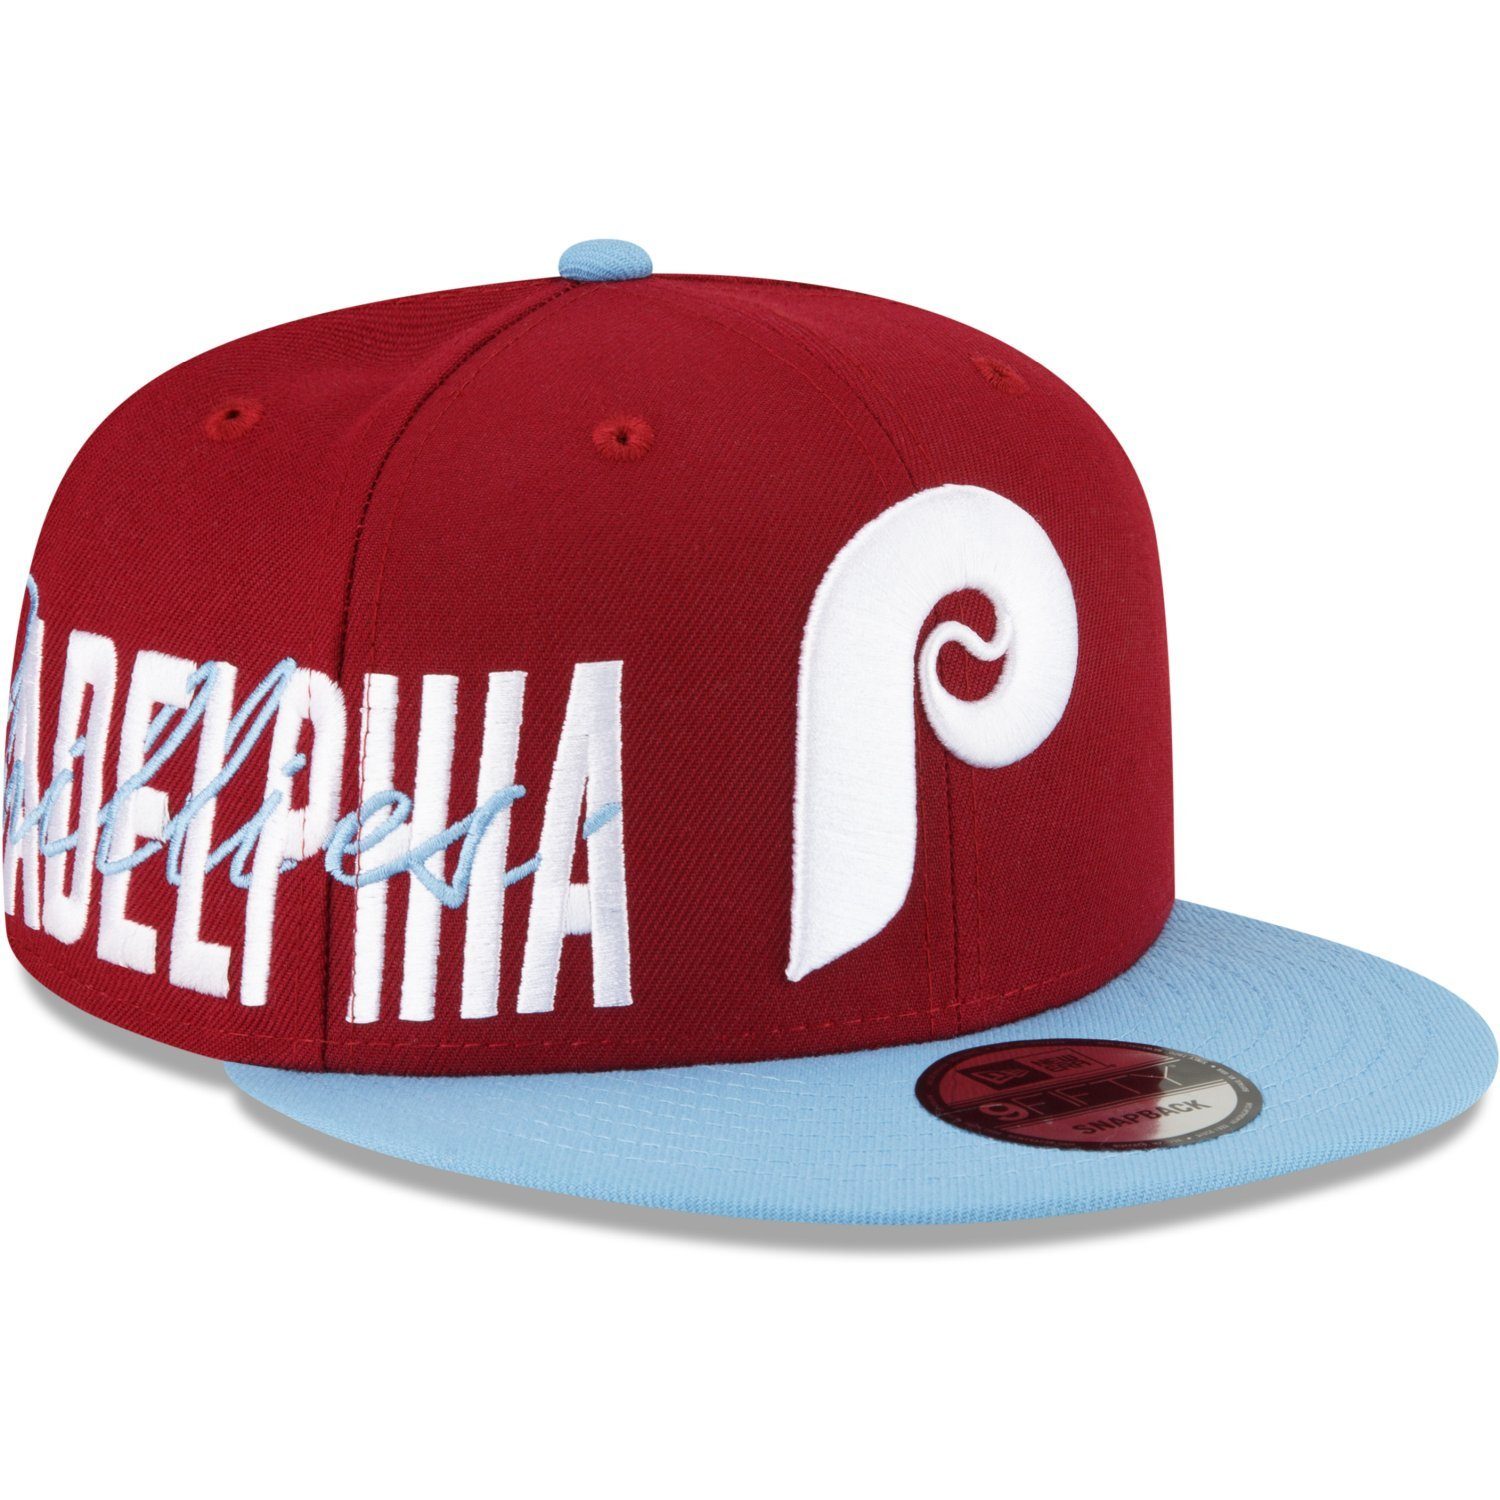 New Era Snapback Cap 9Fifty SIDEFONT Philadelphia Phillies